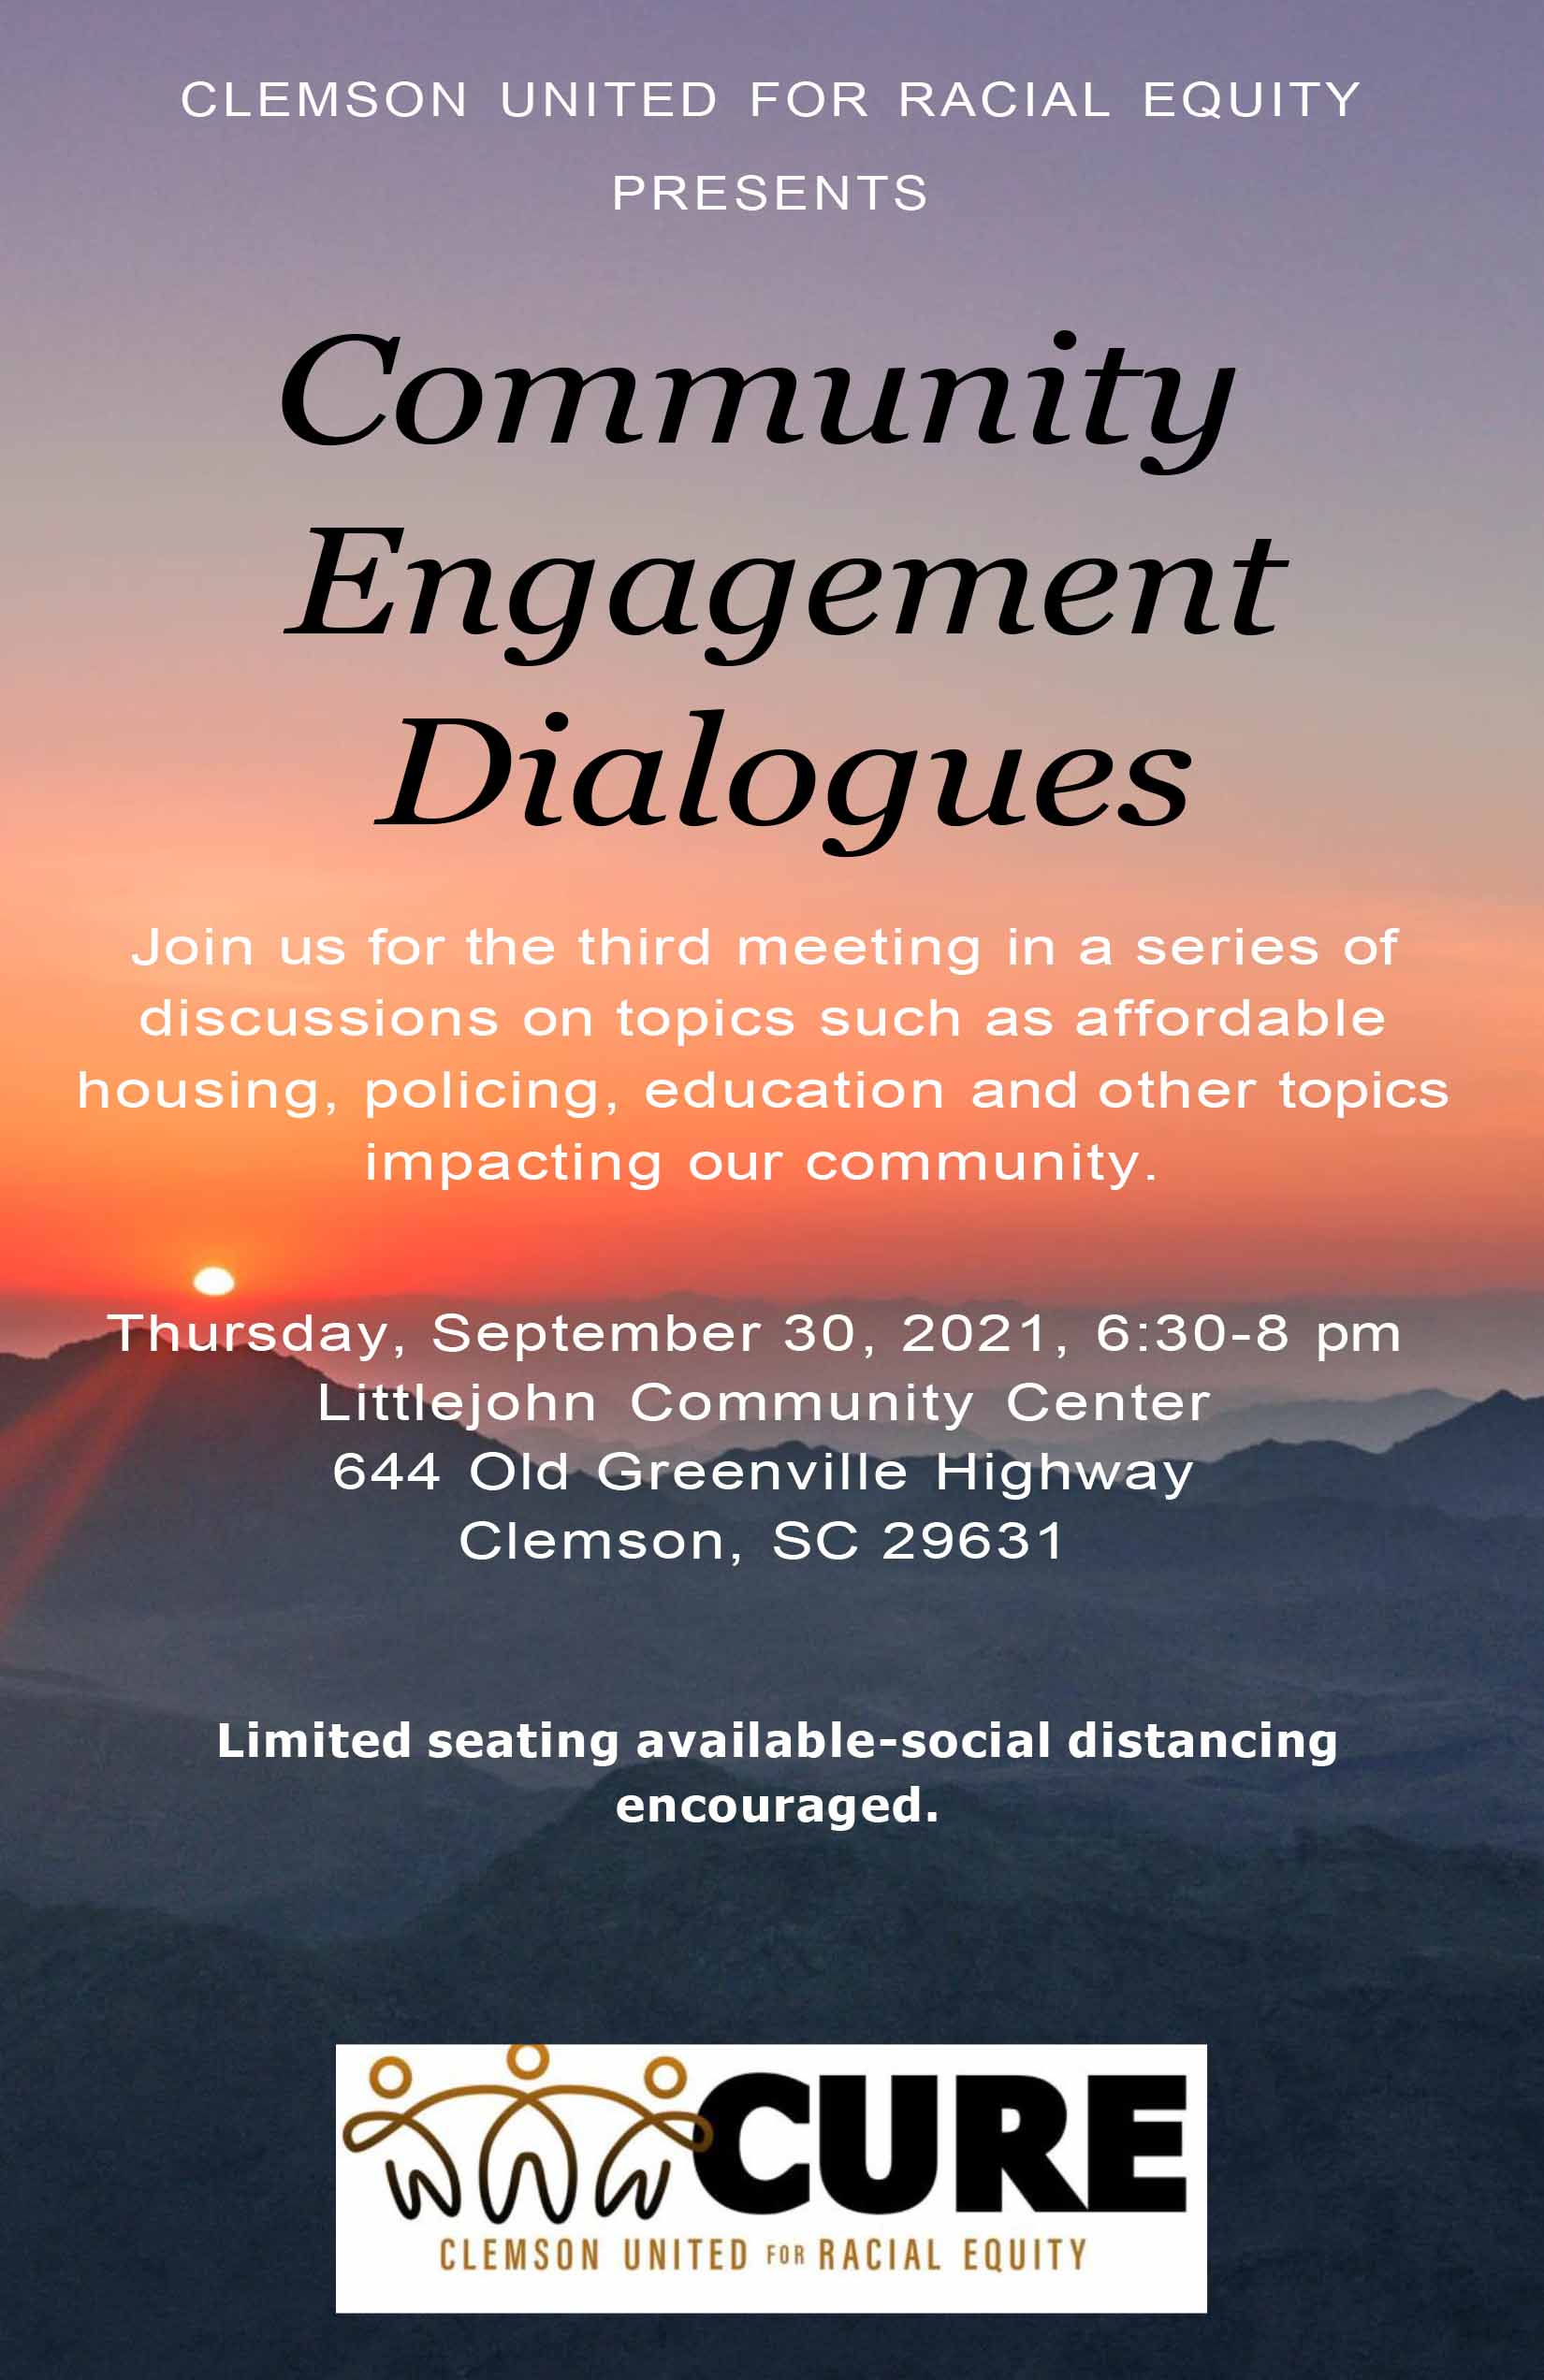 CURE - Presents Community Engagement Dialogues